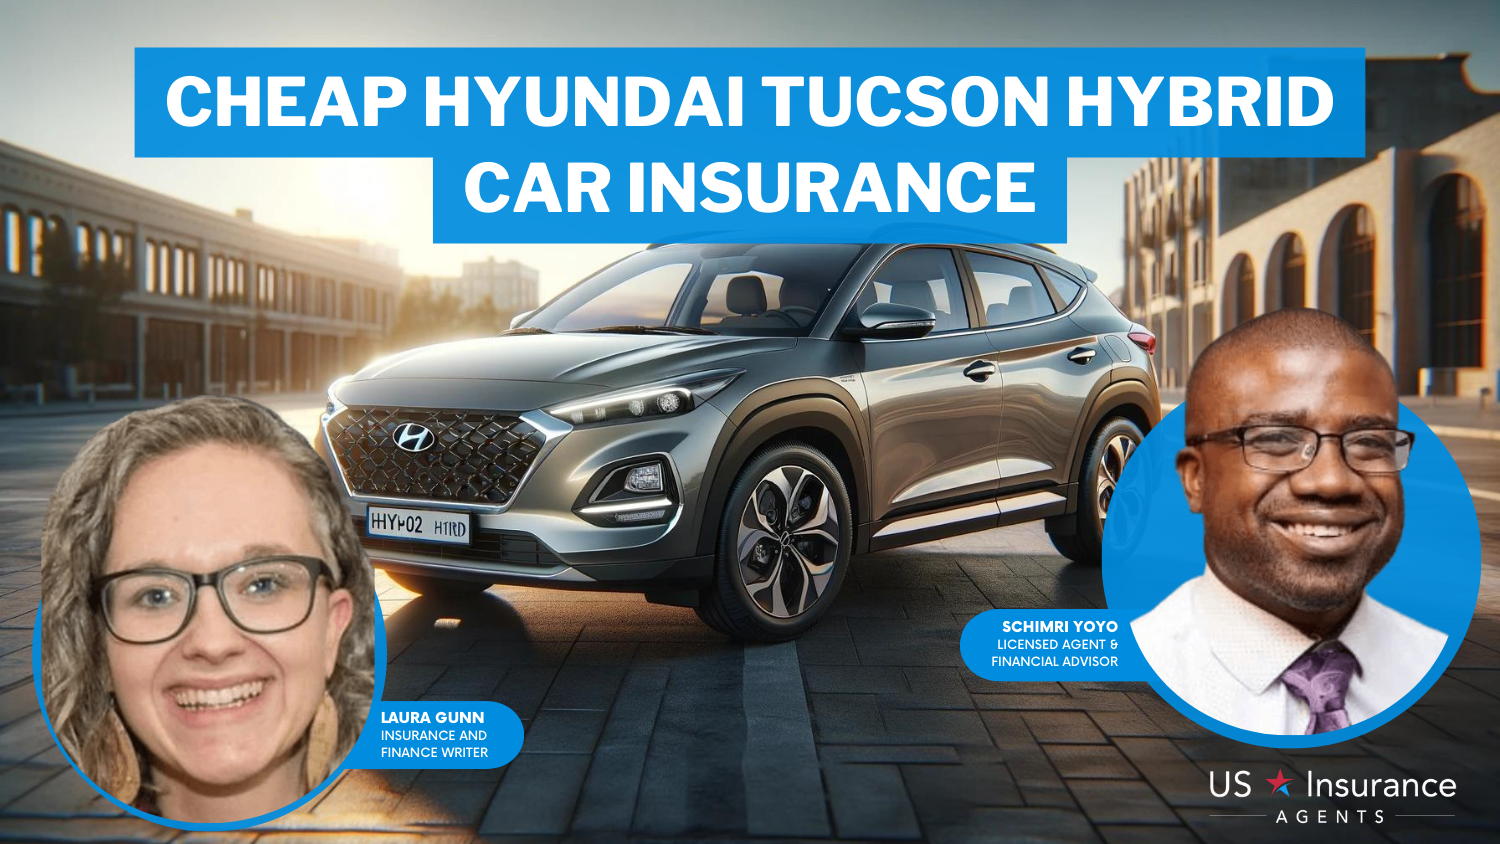 Cheap Hyundai Tucson Hybrid Car Insurance: Progressive, USAA, and State Farm.